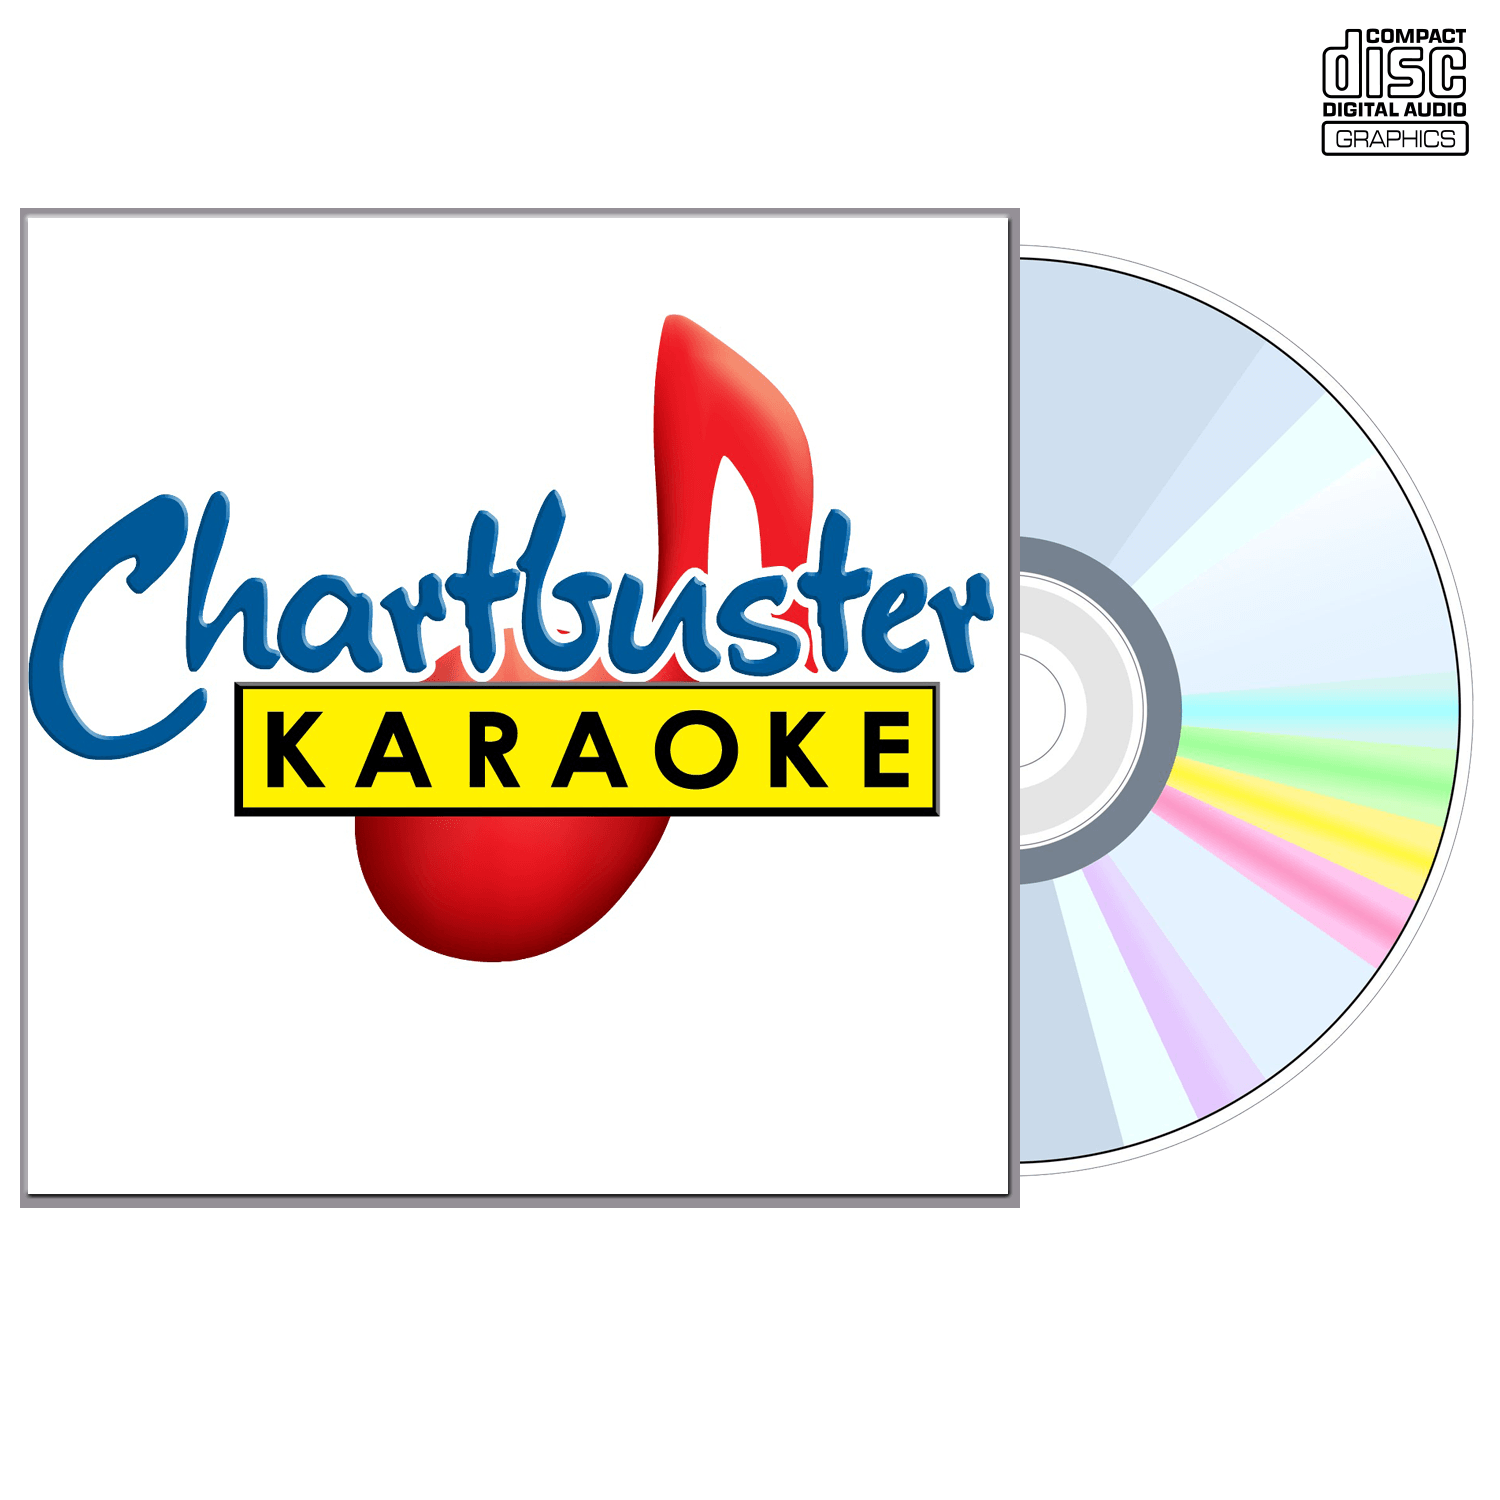 Lorrie Morgan Vol 2 - CD+G - Chartbuster Karaoke - Karaoke Home Entertainment